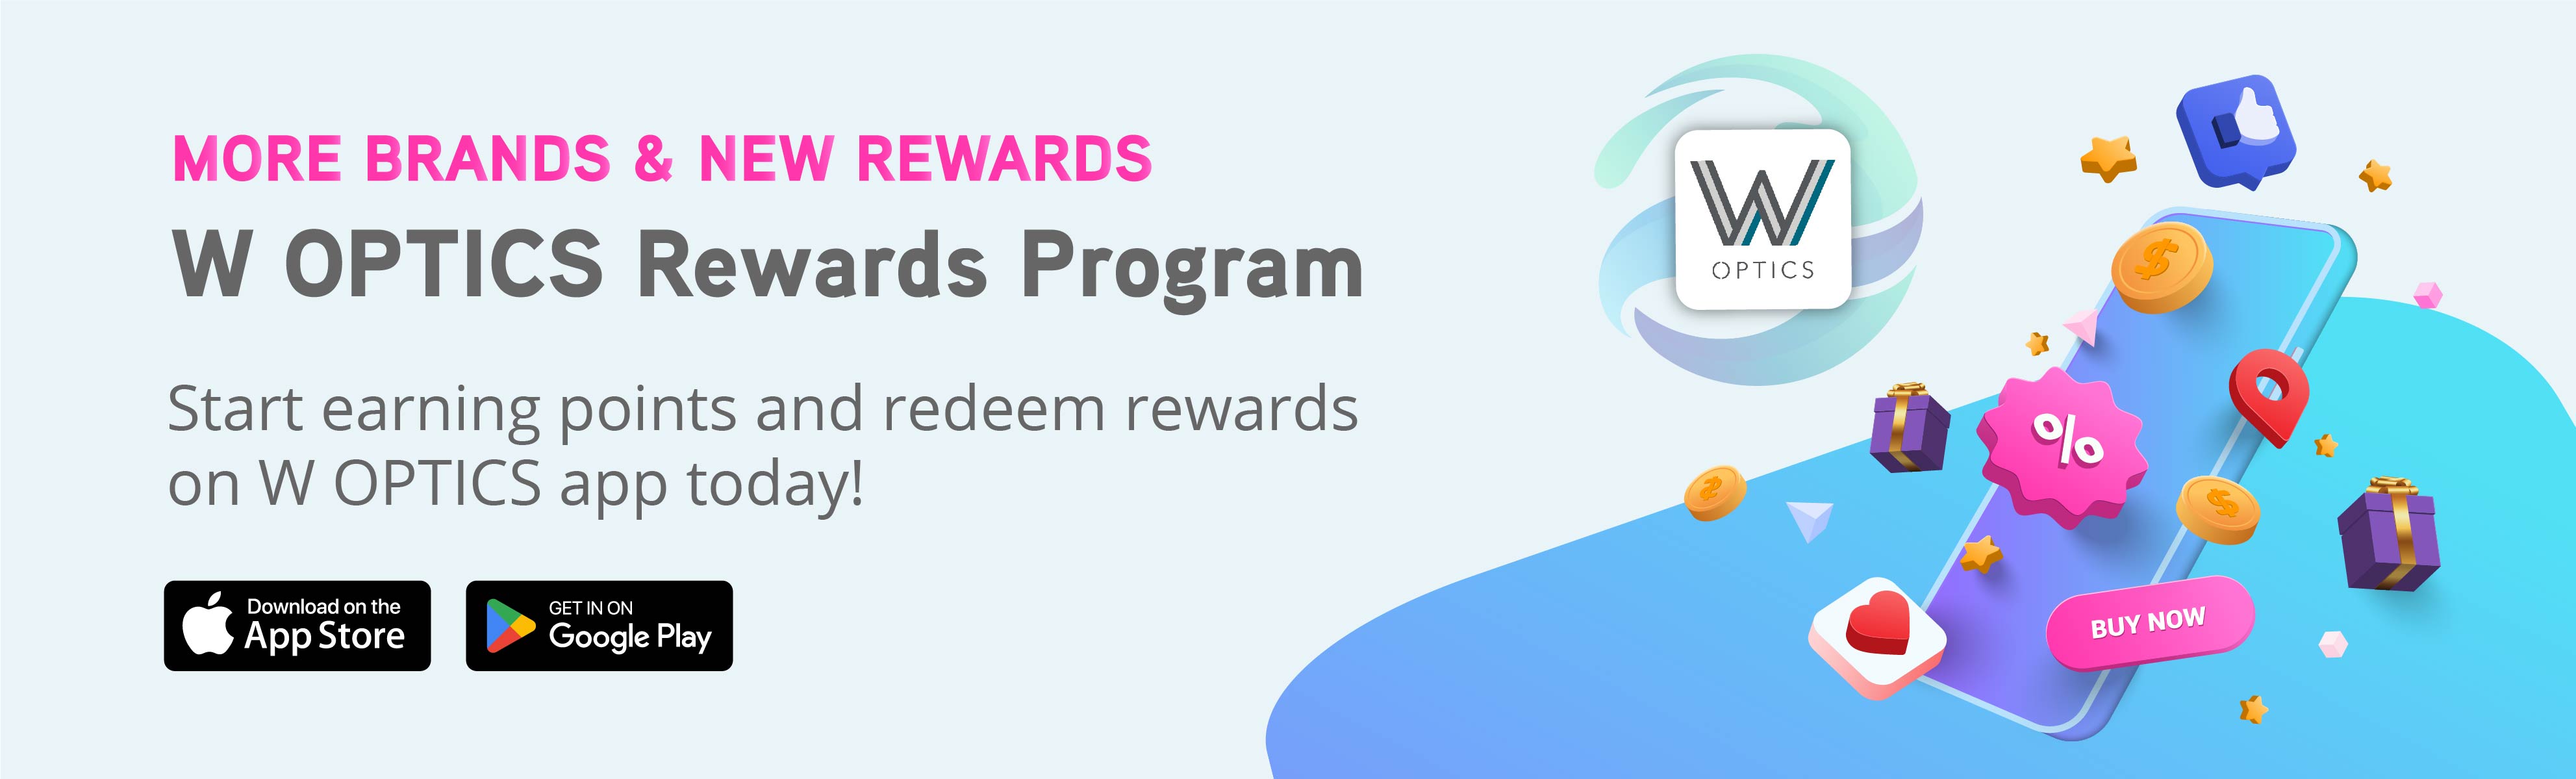 woptics-new-rewards-program